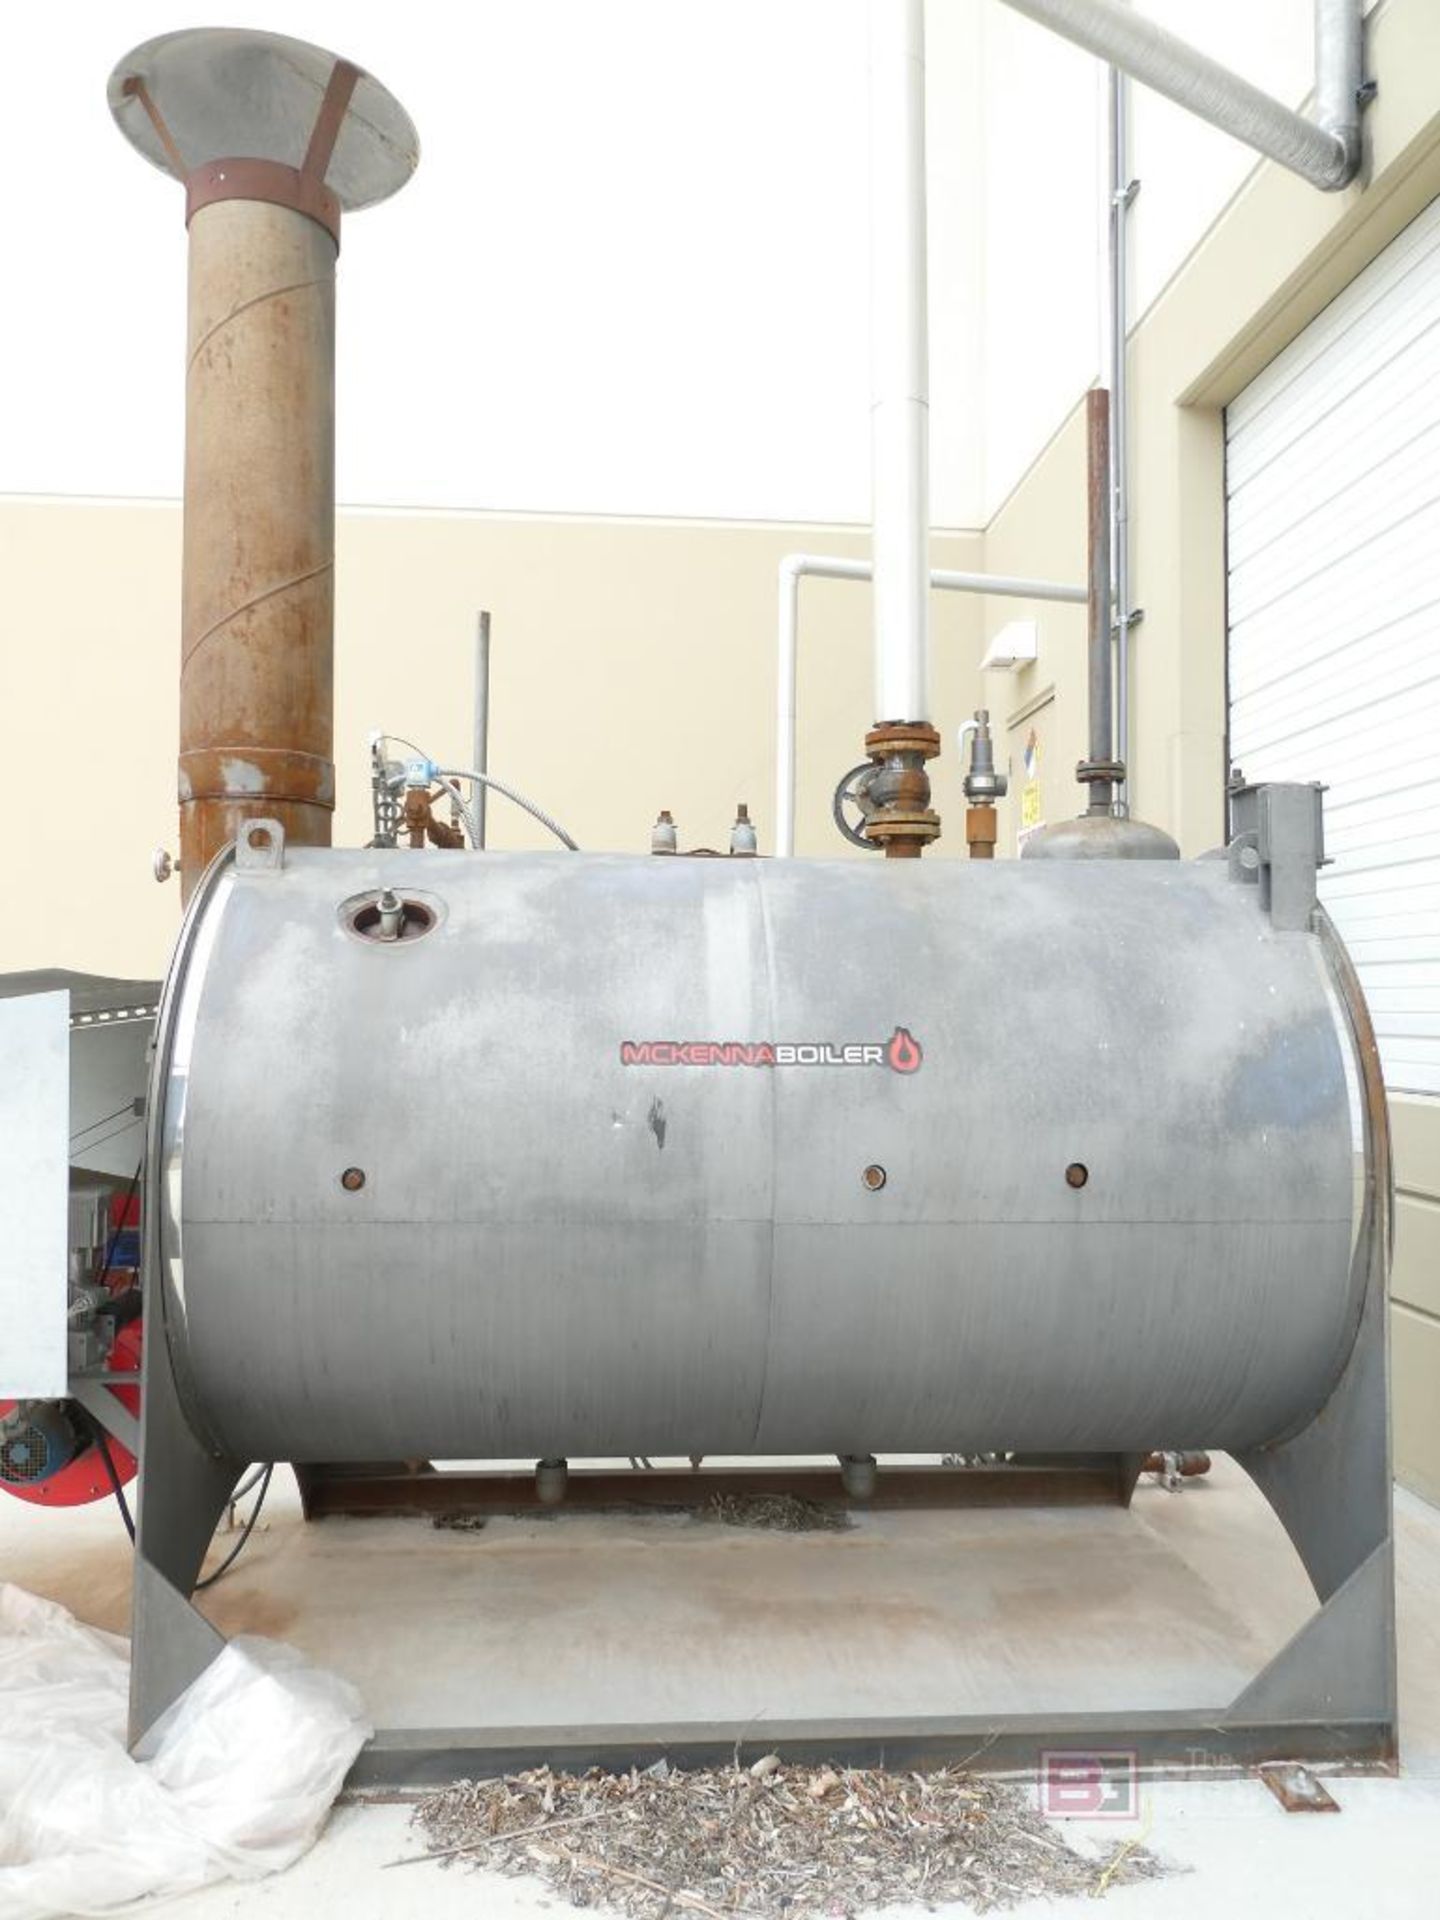 2019 McKenna Boilers Model JFS50LF, 50HP High Pressure Steam Boiler - Image 3 of 15